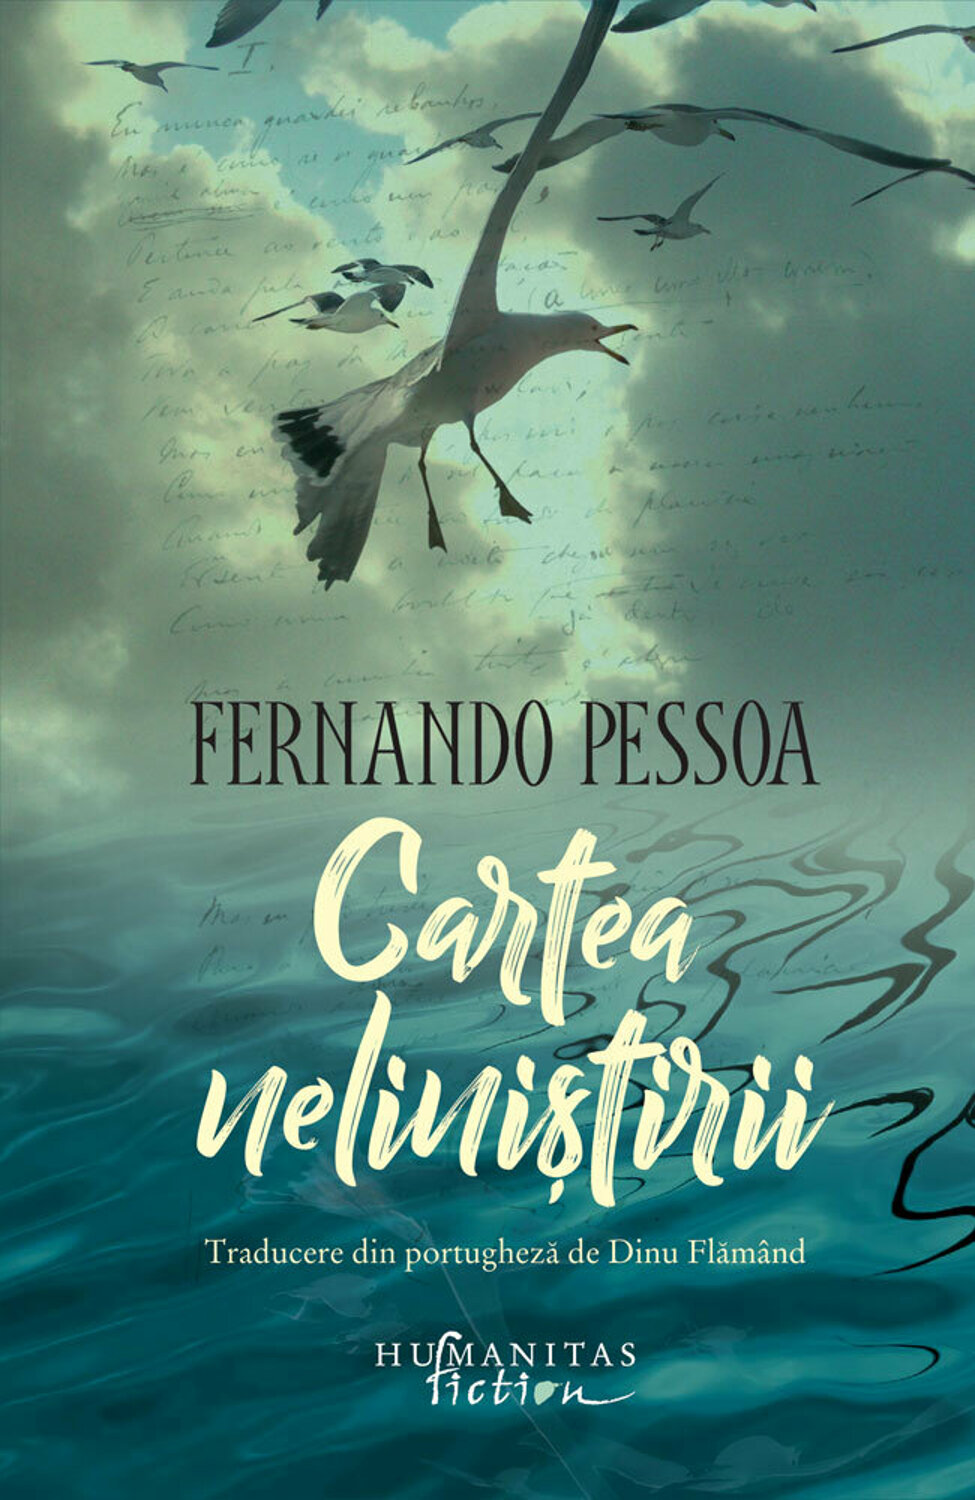 Fernando PESSOA | Cartea nelinistirii. Compusa de Bernardo Soares, ajutor de contabil in orasul Lisabona